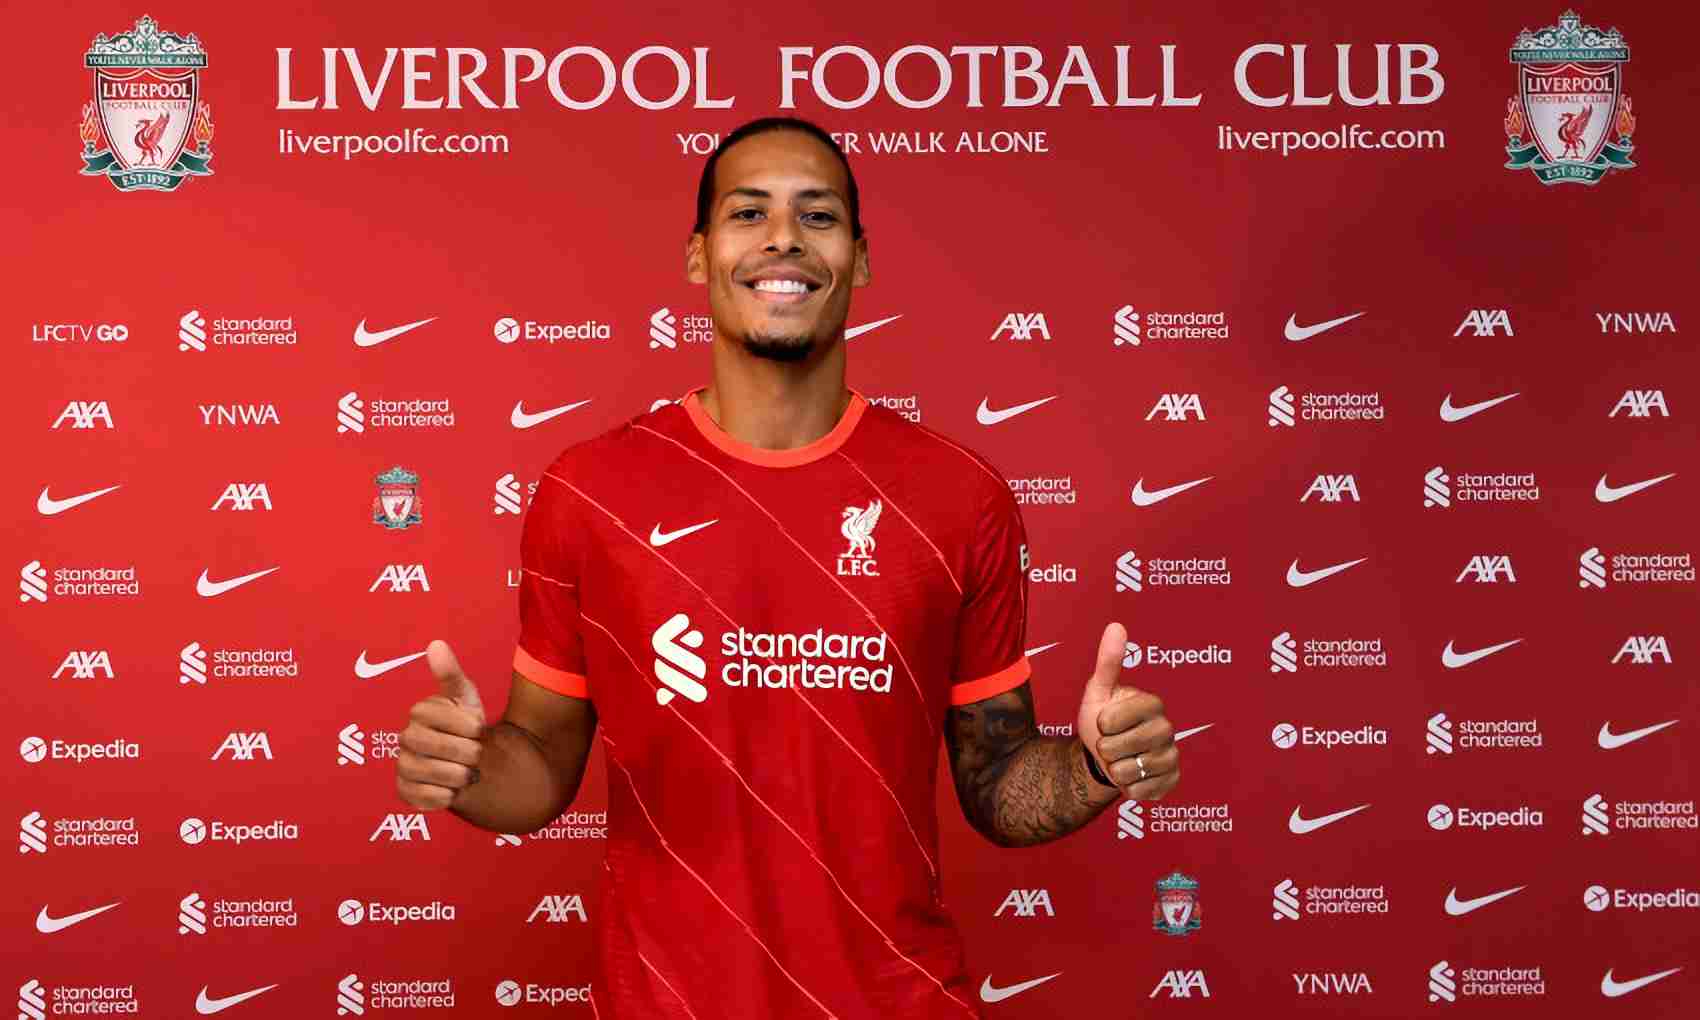 Virgil van Dijk signs a new long-term contract with Liverpool Football club.